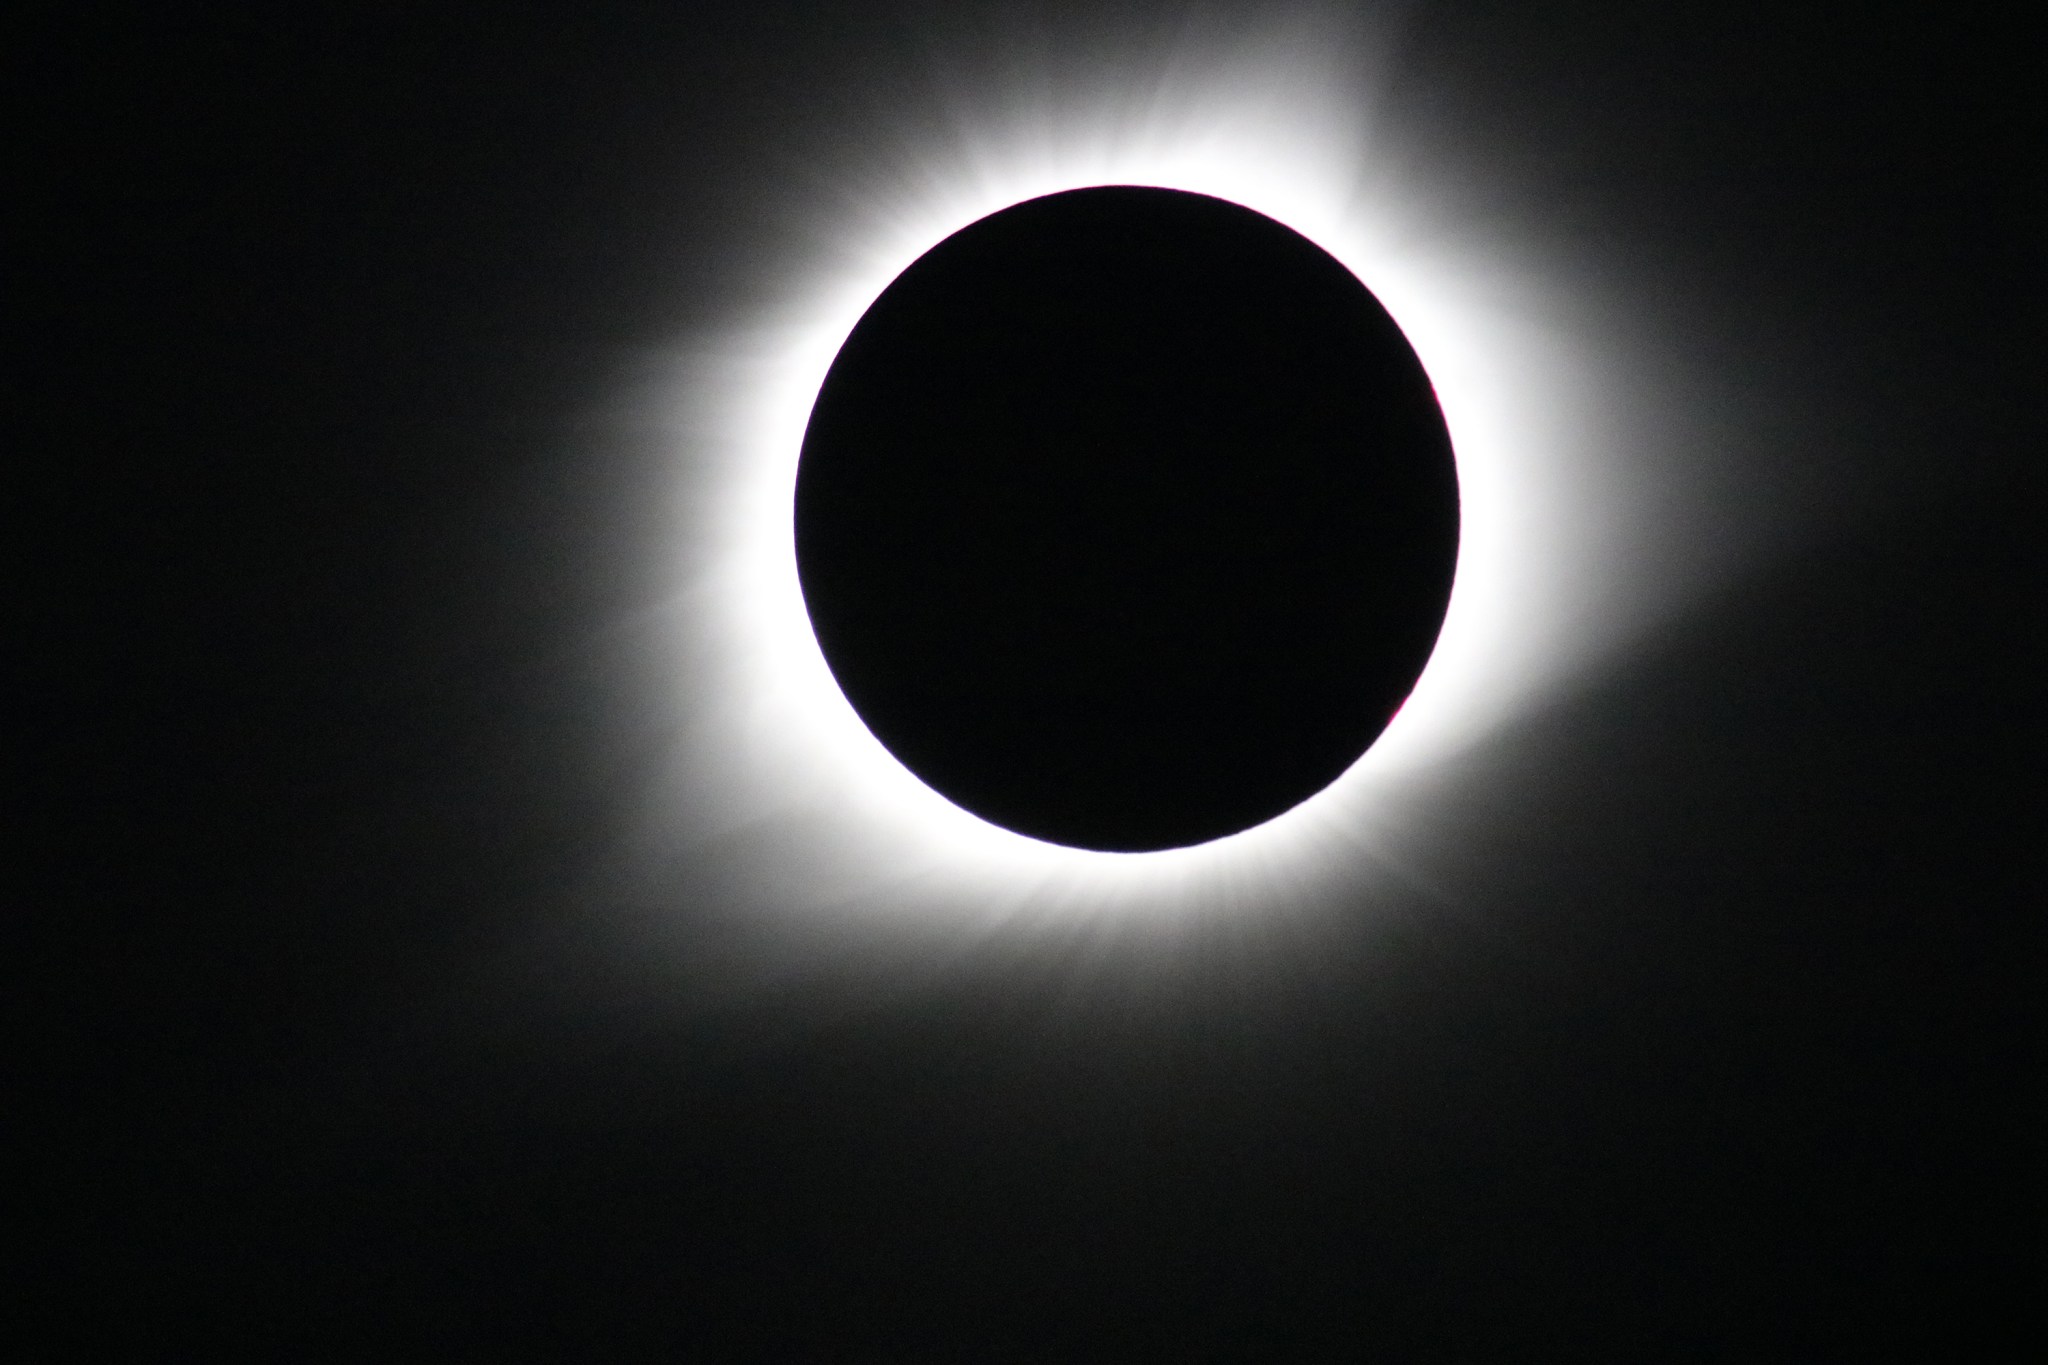 solar eclipse photographed 21 Aug 2017